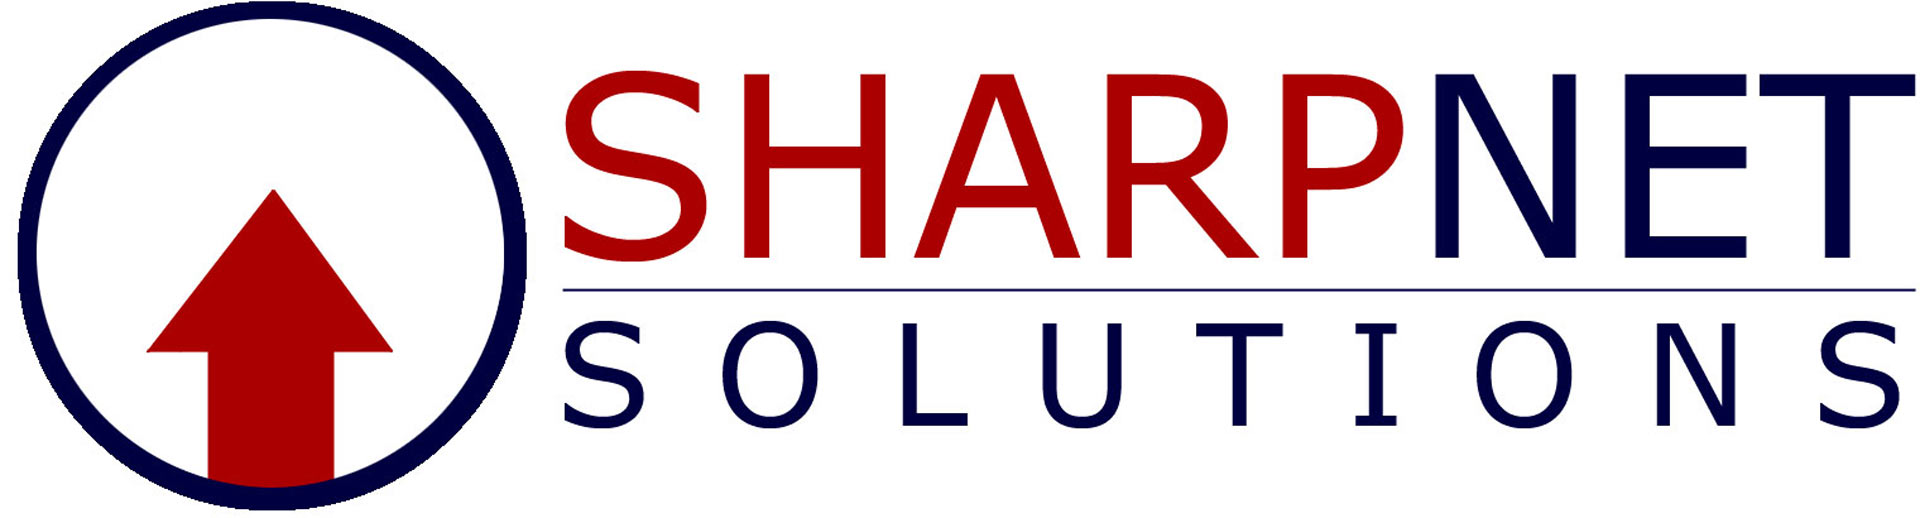 Best Online Marketing Firm Logo: SharpNet